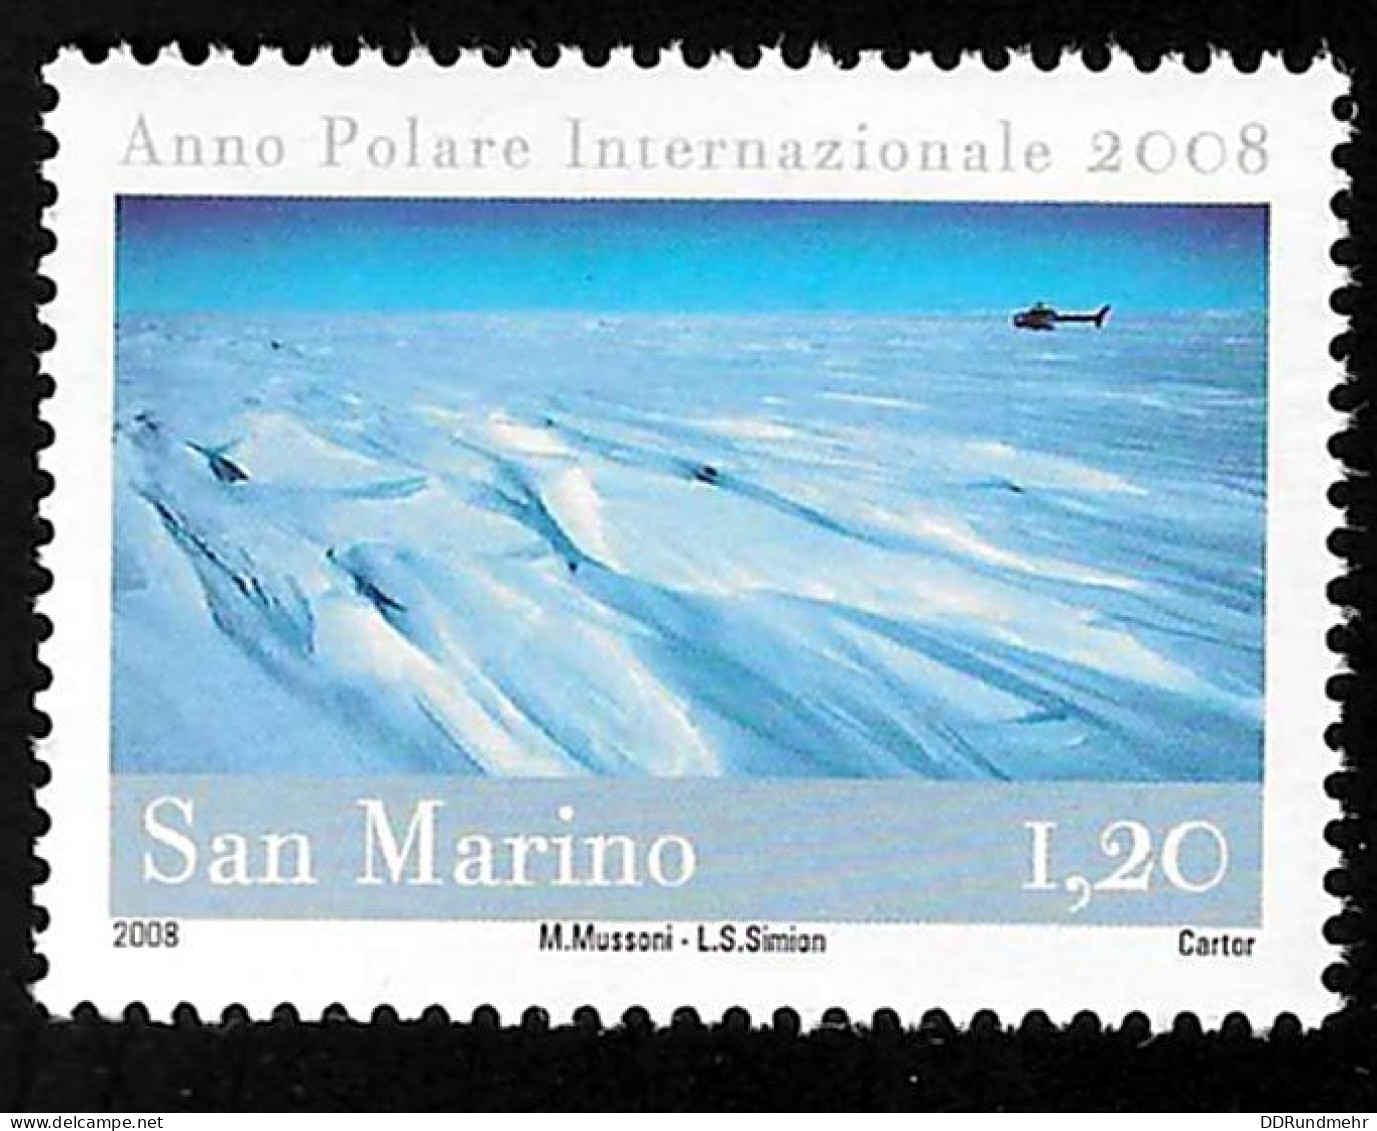 2008 Polar Year  Michel SM 2360 Stamp Number SM 1770 Yvert Et Tellier SM 2153 Stanley Gibbons SM 2186 Xx MNH - Nuovi